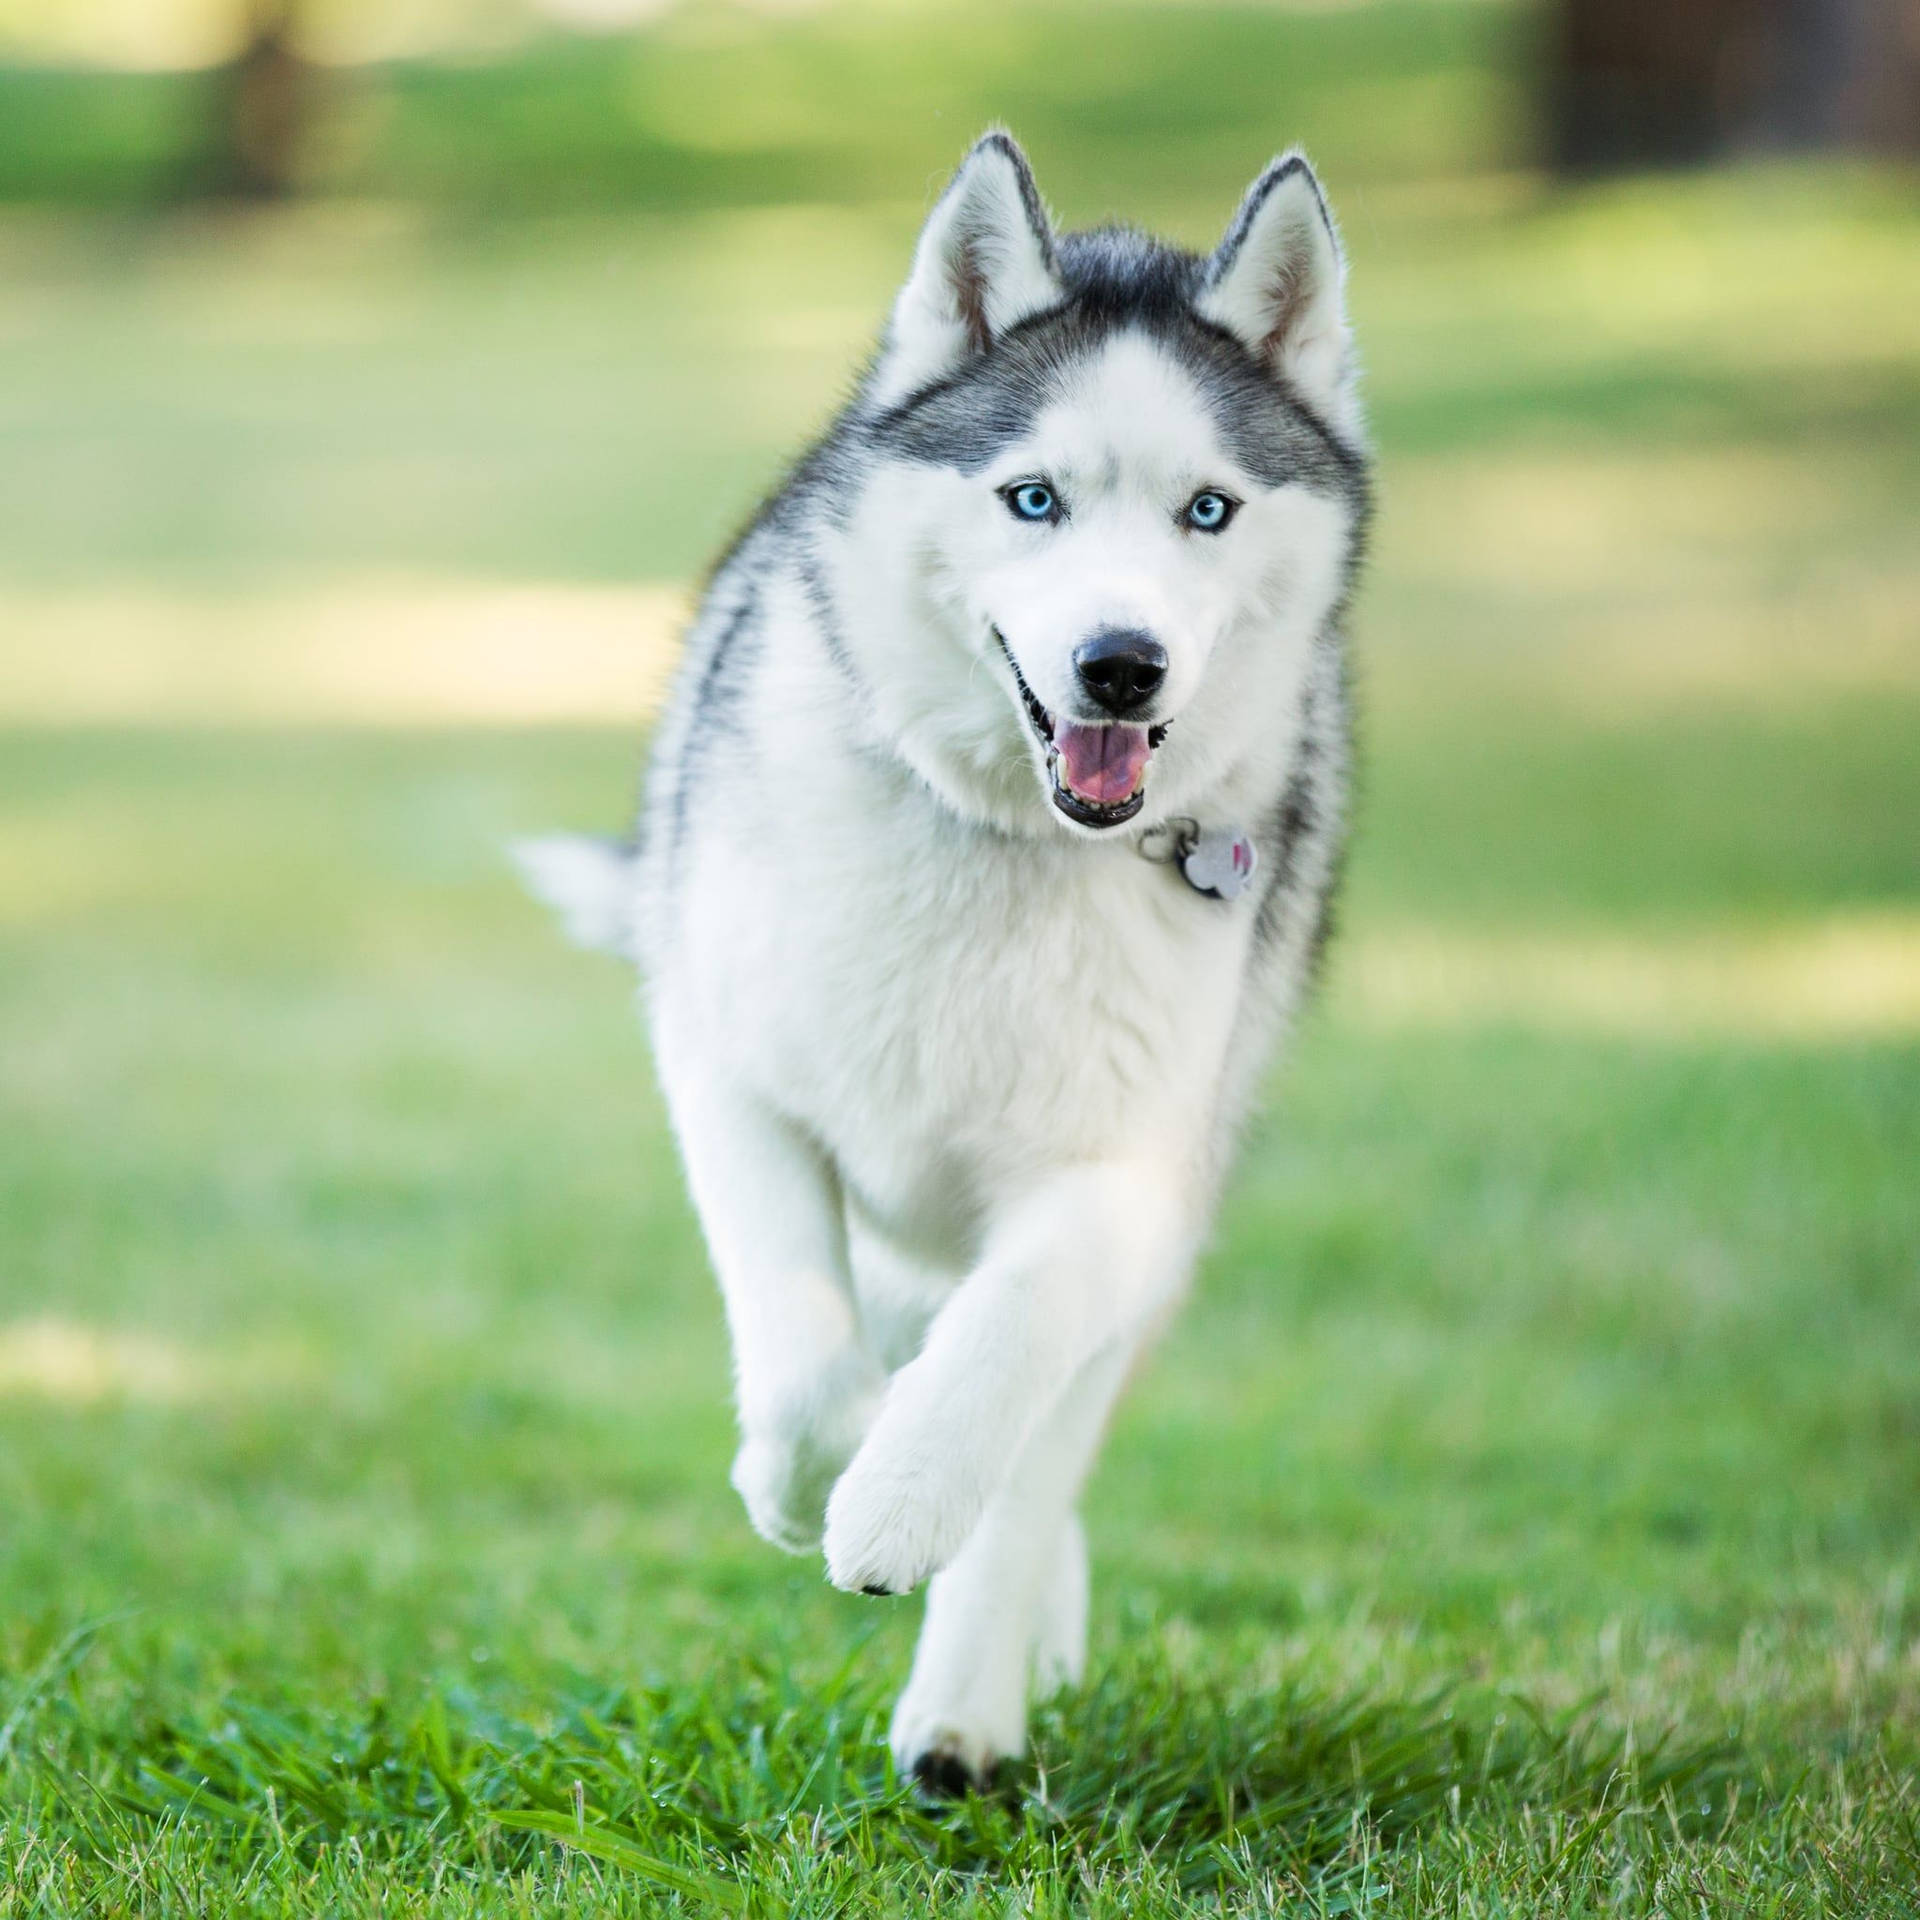 Husky Dog Running On Grass Background